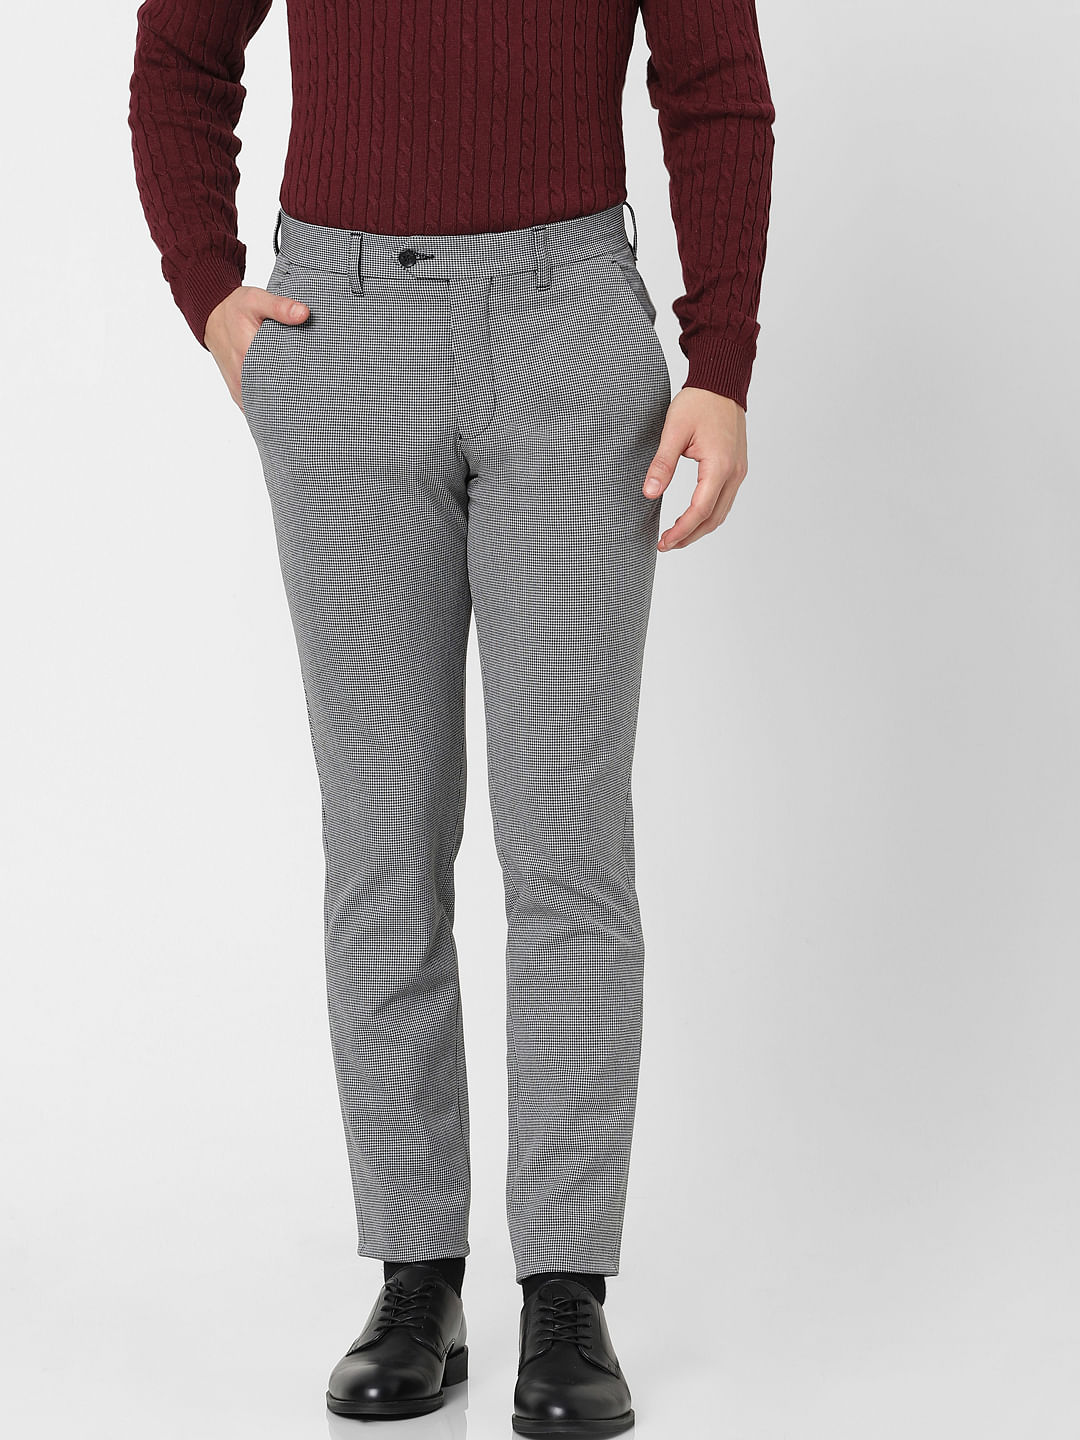 Buy Men Black Solid Slim Fit Formal Trousers Online - 397675 | Peter England